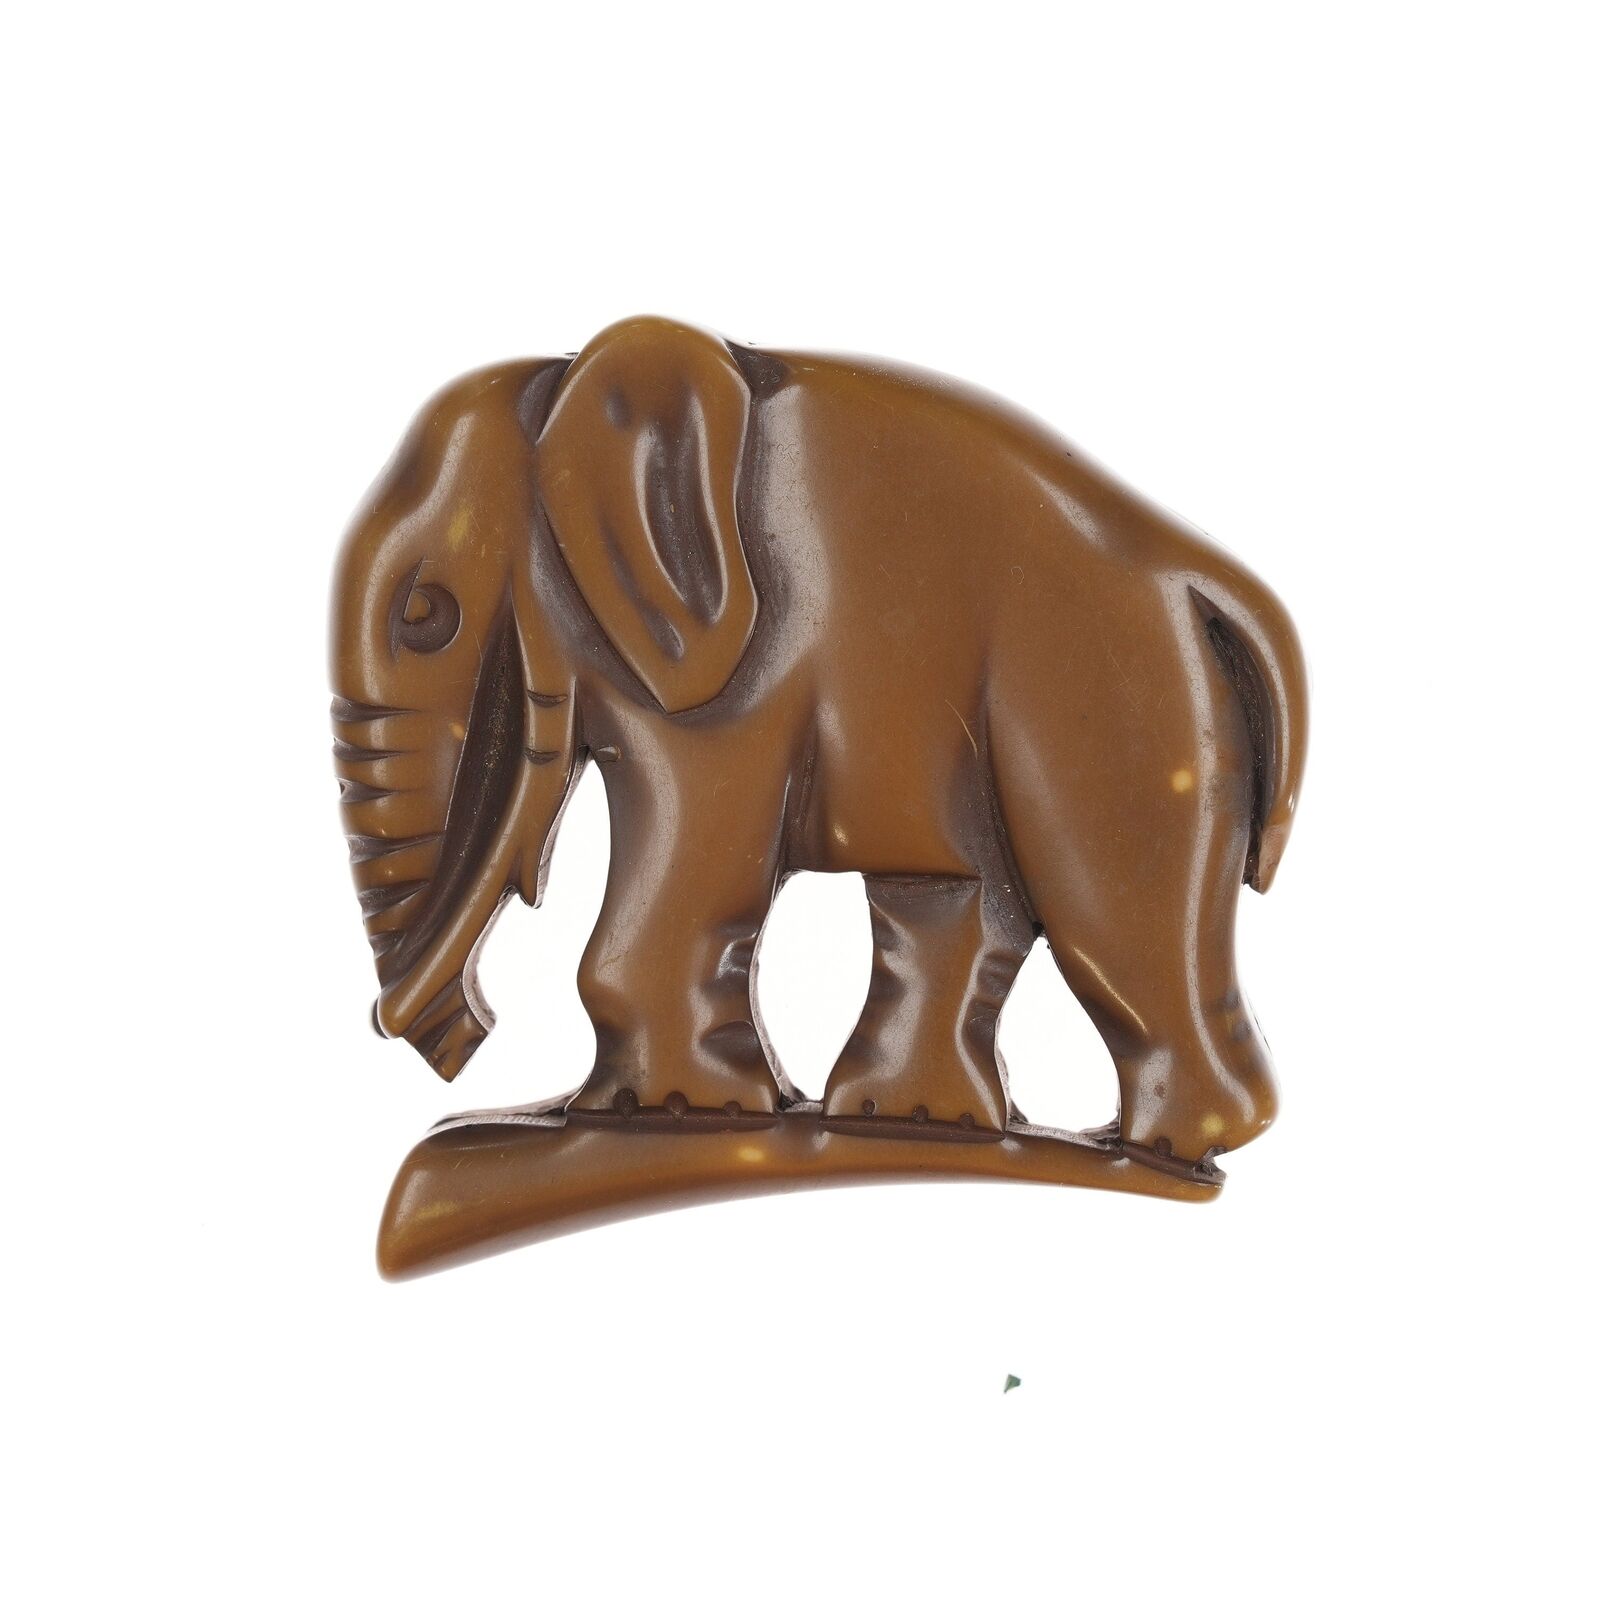 c1940's Bakelite Elephant brooch